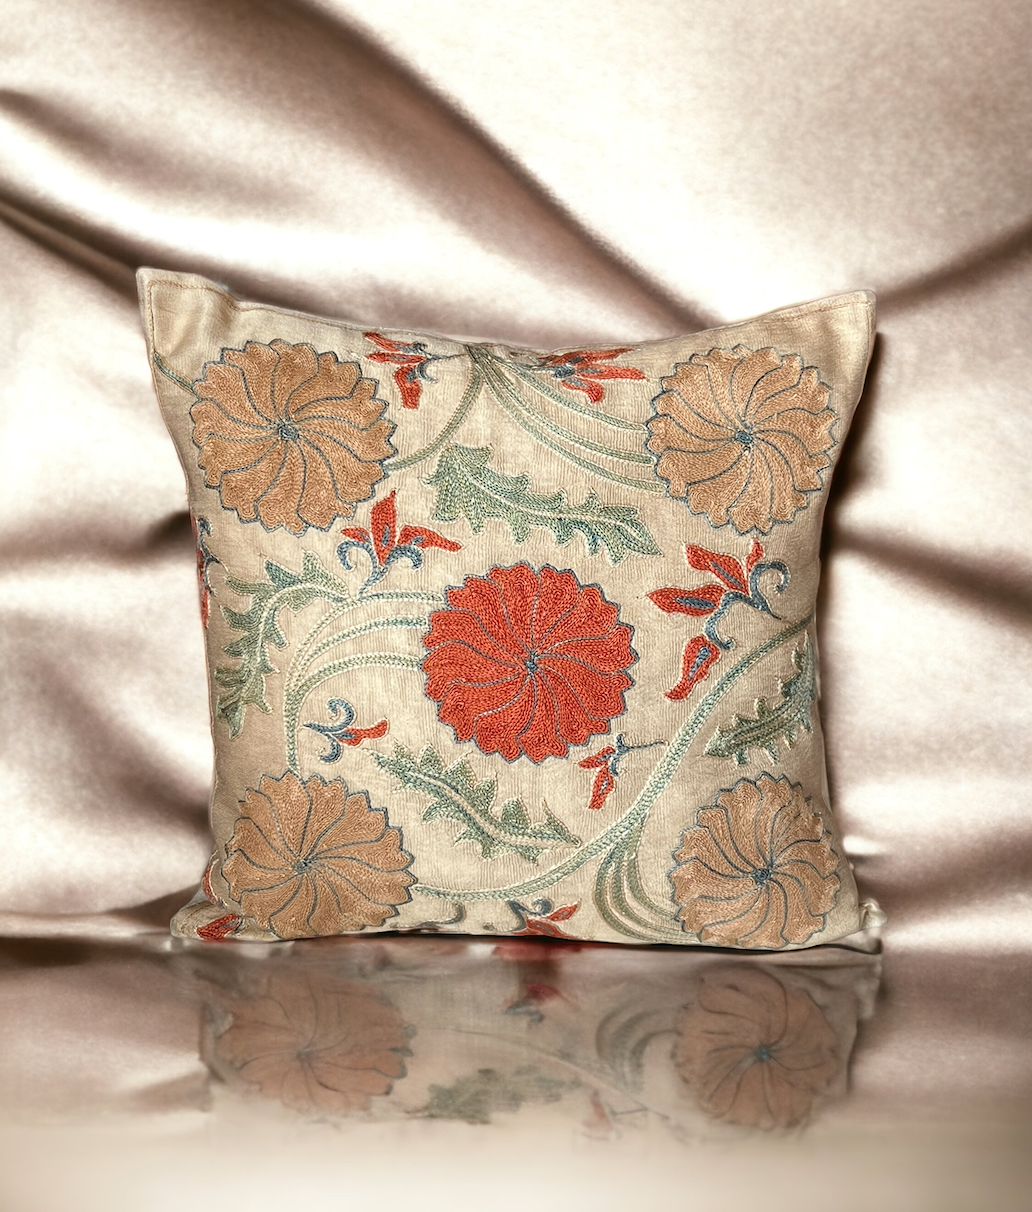 Silk embroidered pillows handmade in Turkey